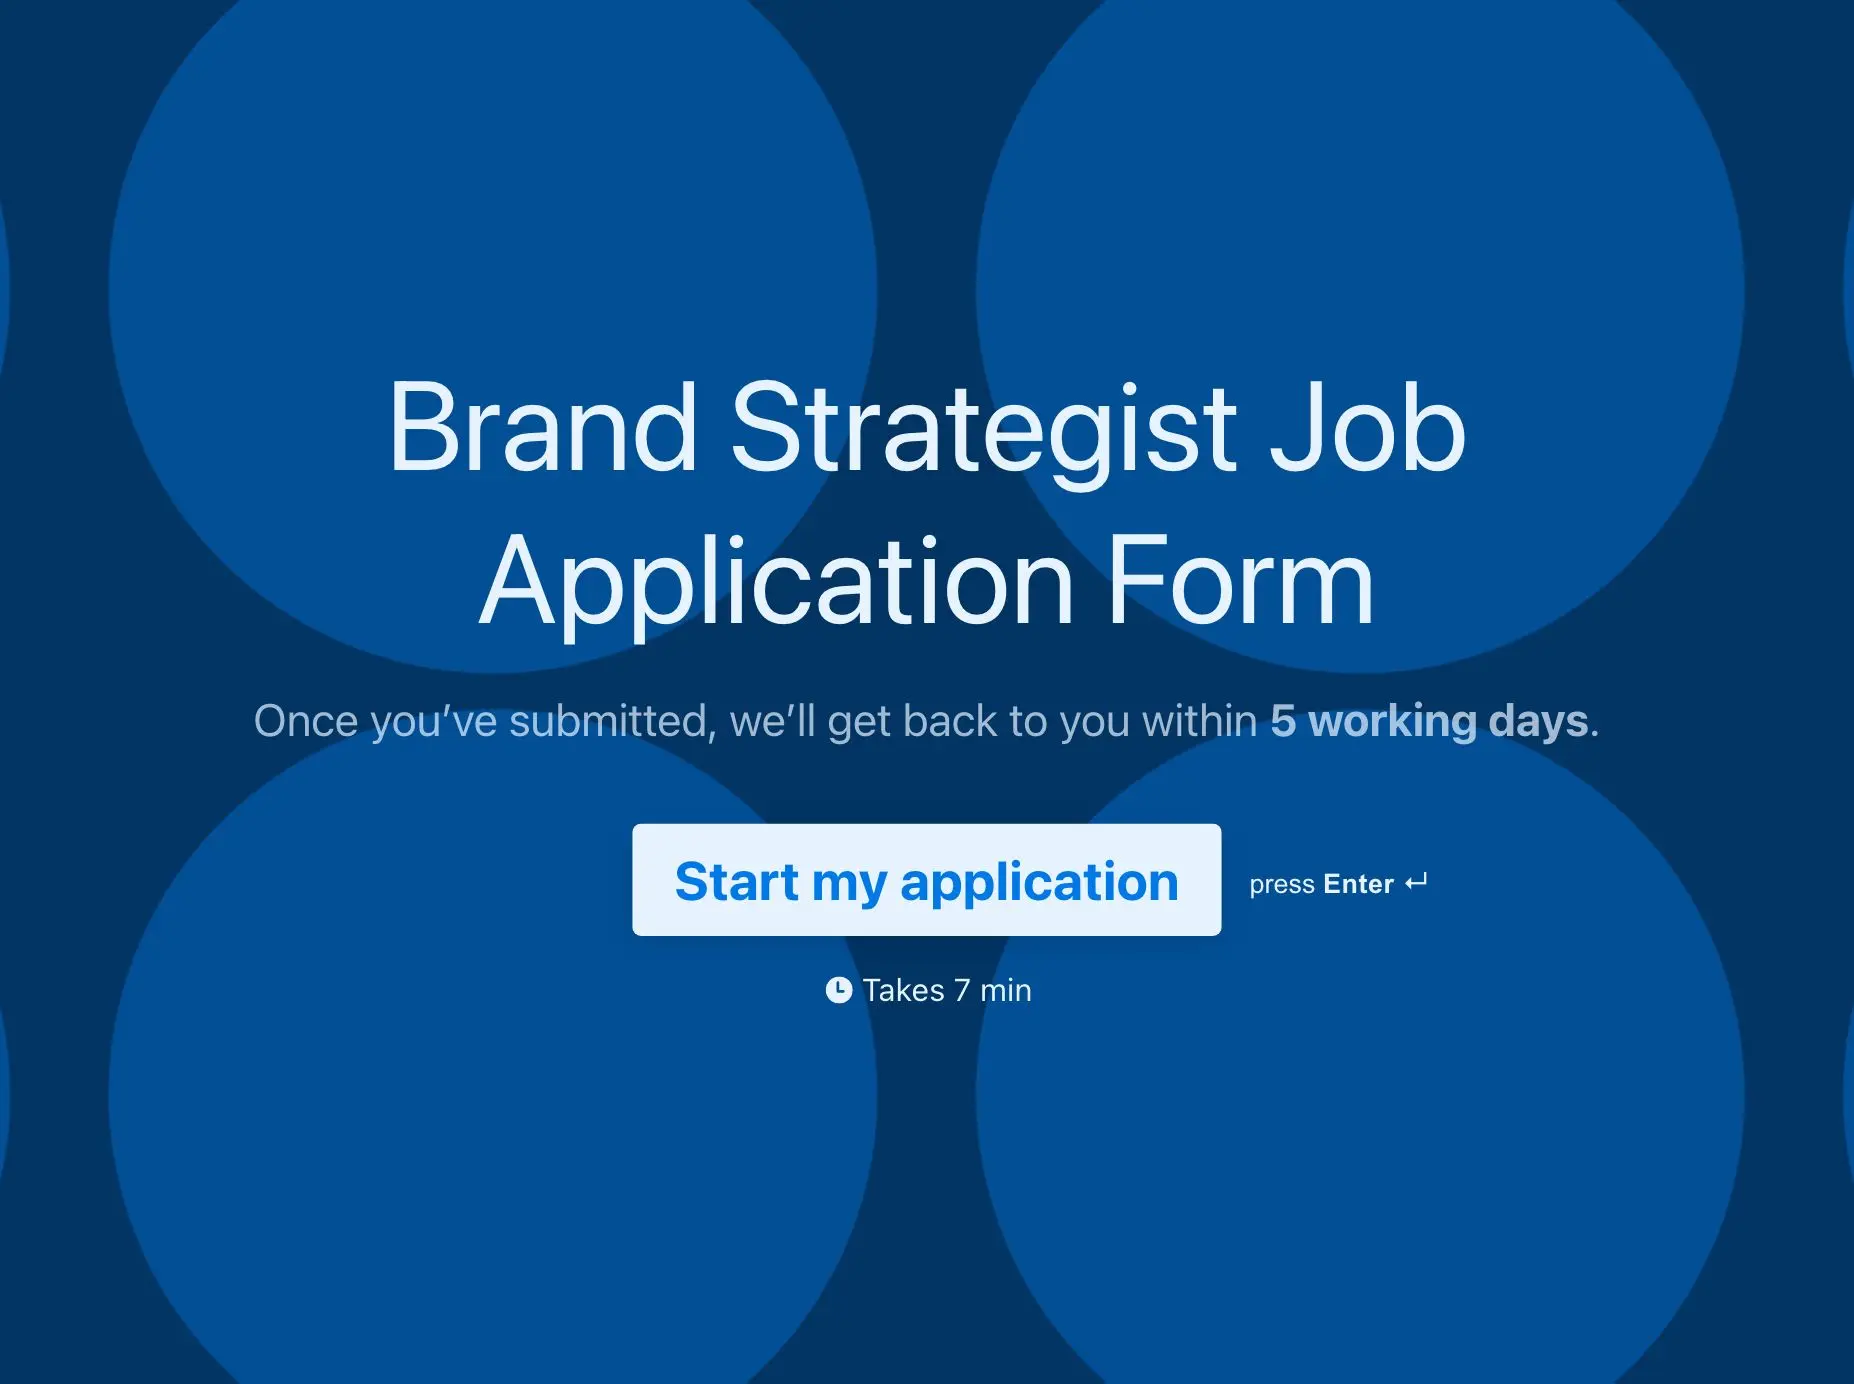 Brand Strategist Job Application Form Template Hero